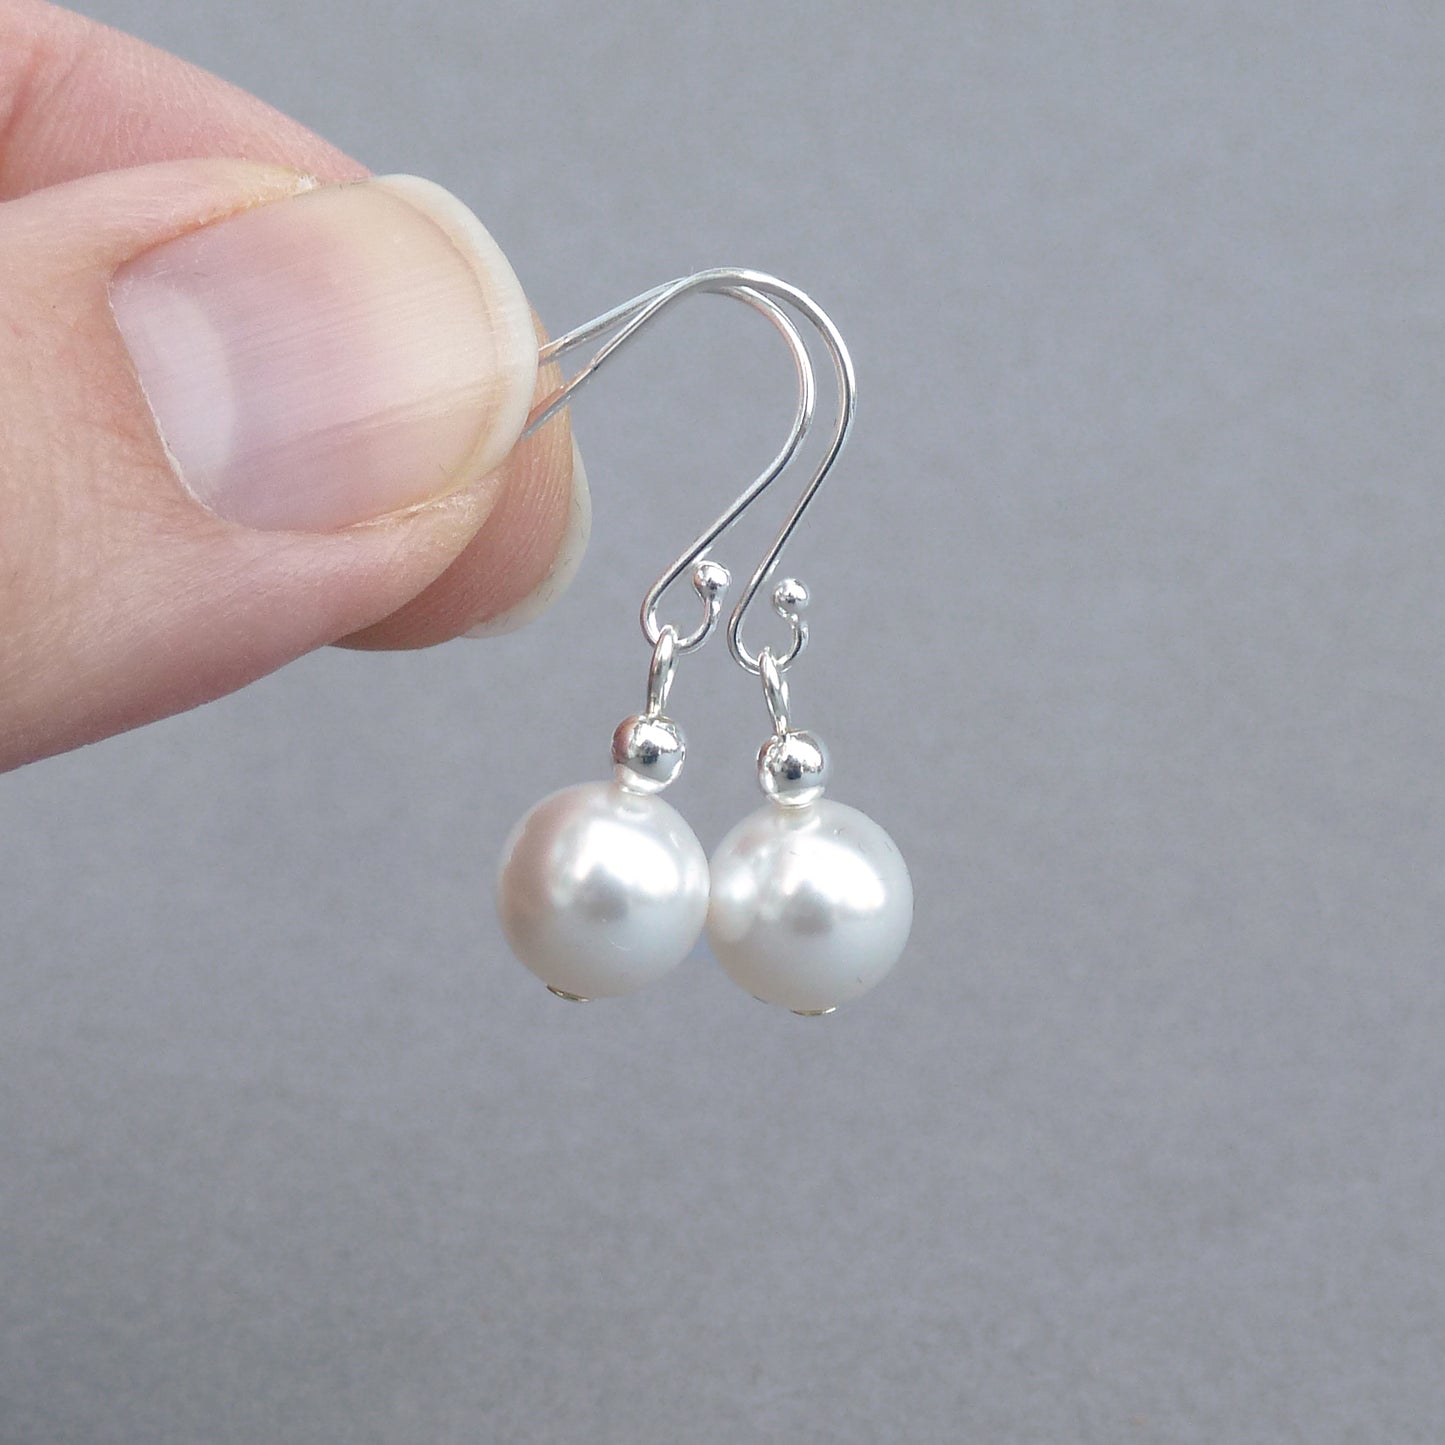 Simple dangly white pearl earrings